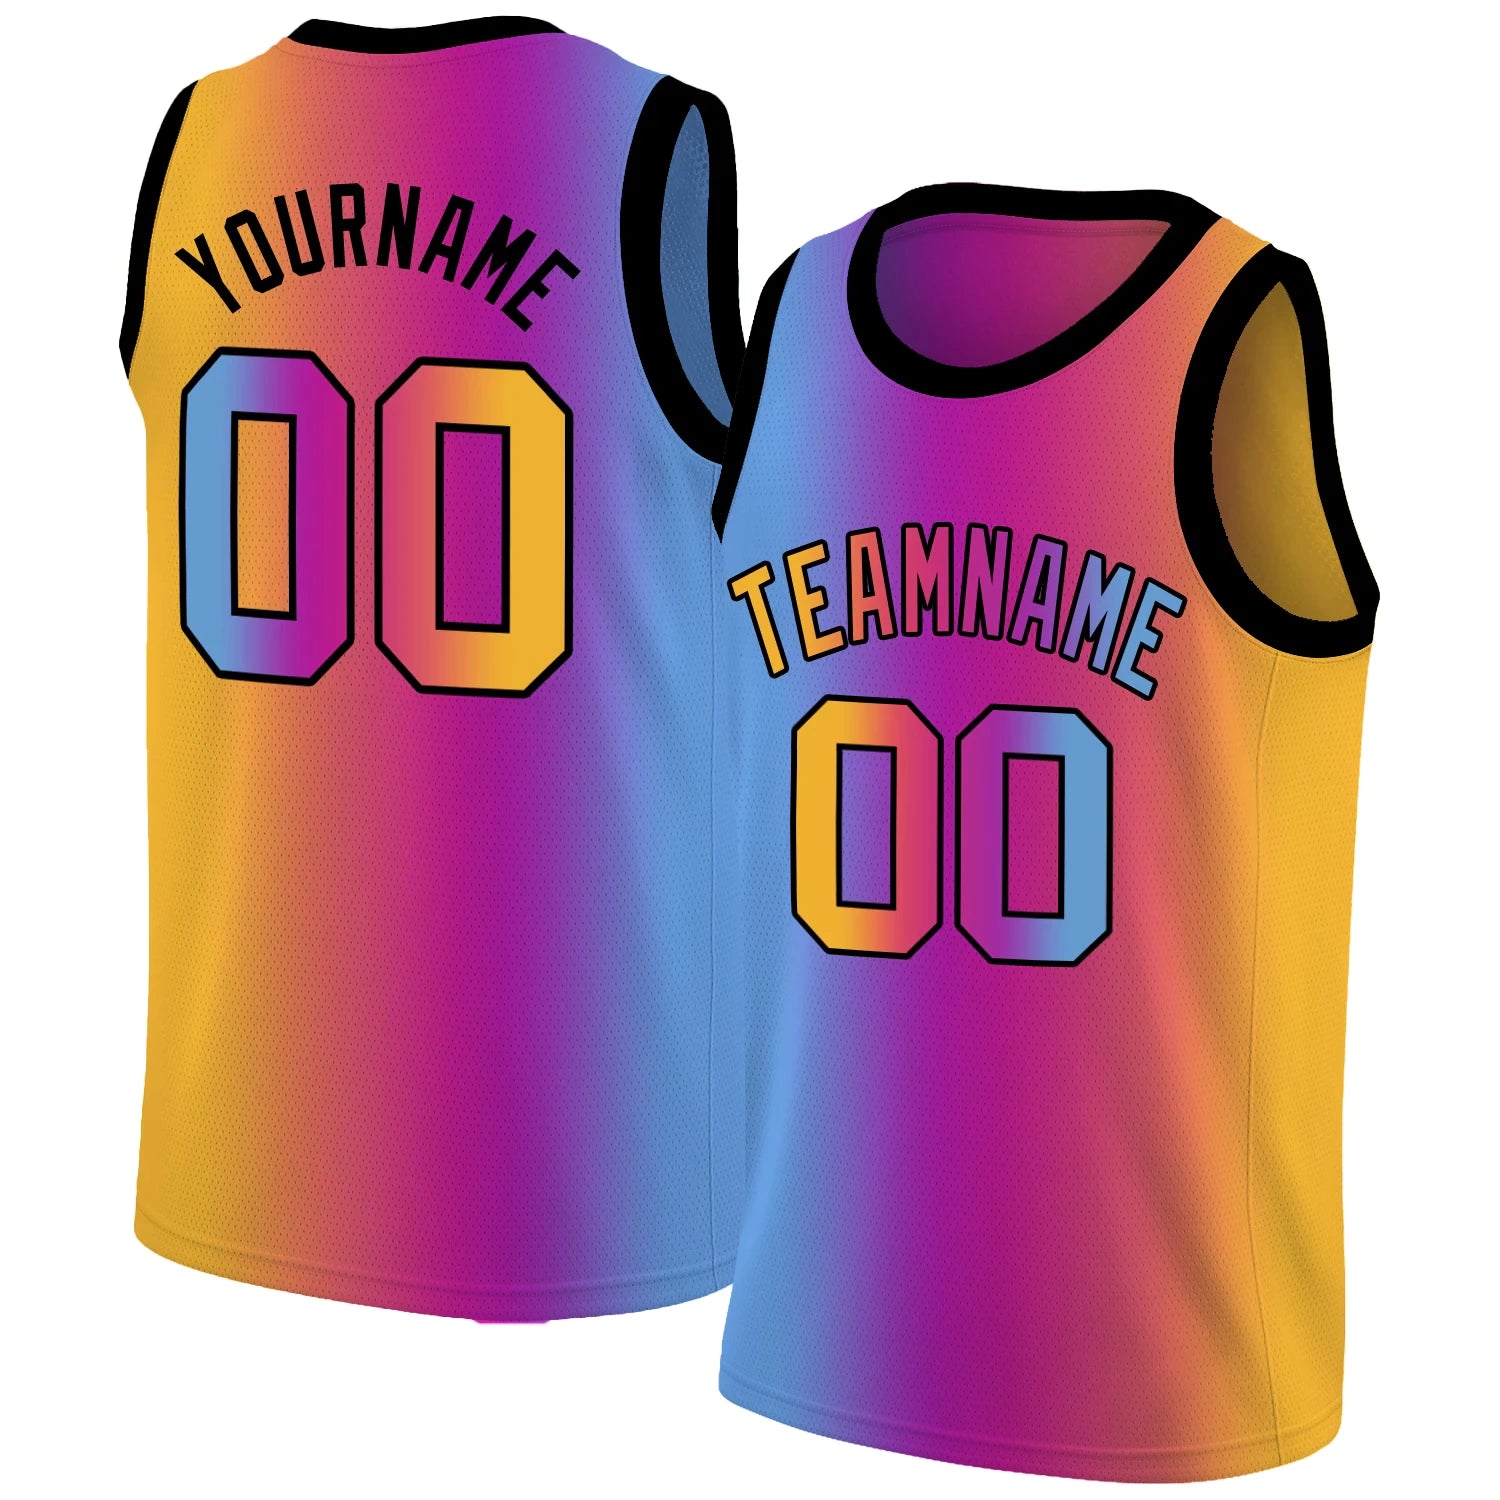 Custom Basketball Jerseys, Sublimated Basketball Uniforms